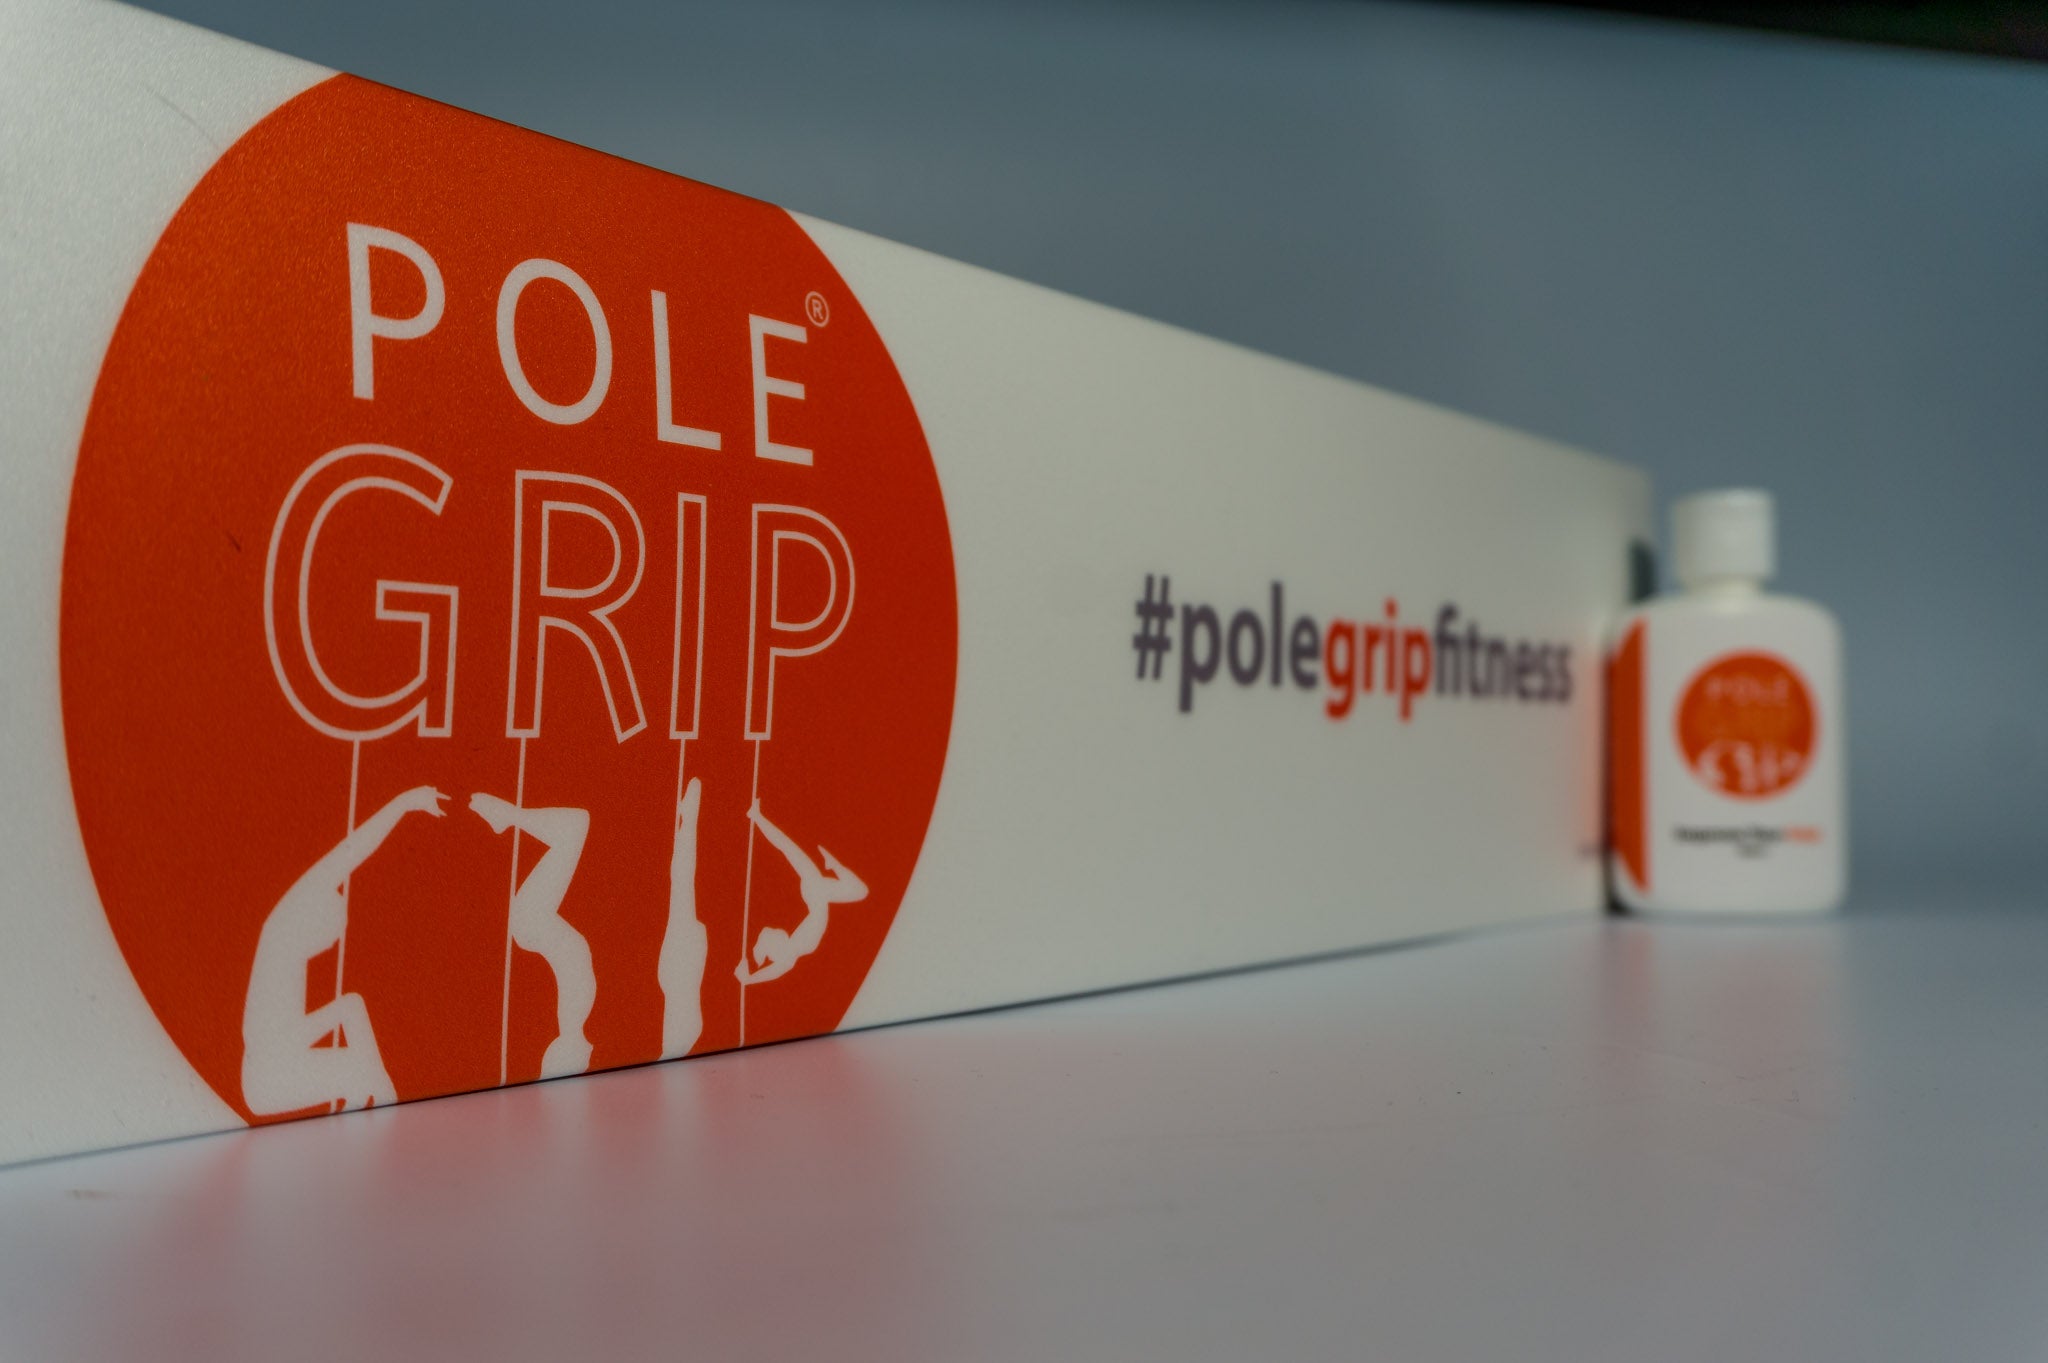 25 Pack Pole Grip + 12 Pack Body Grip! PRE ORDER